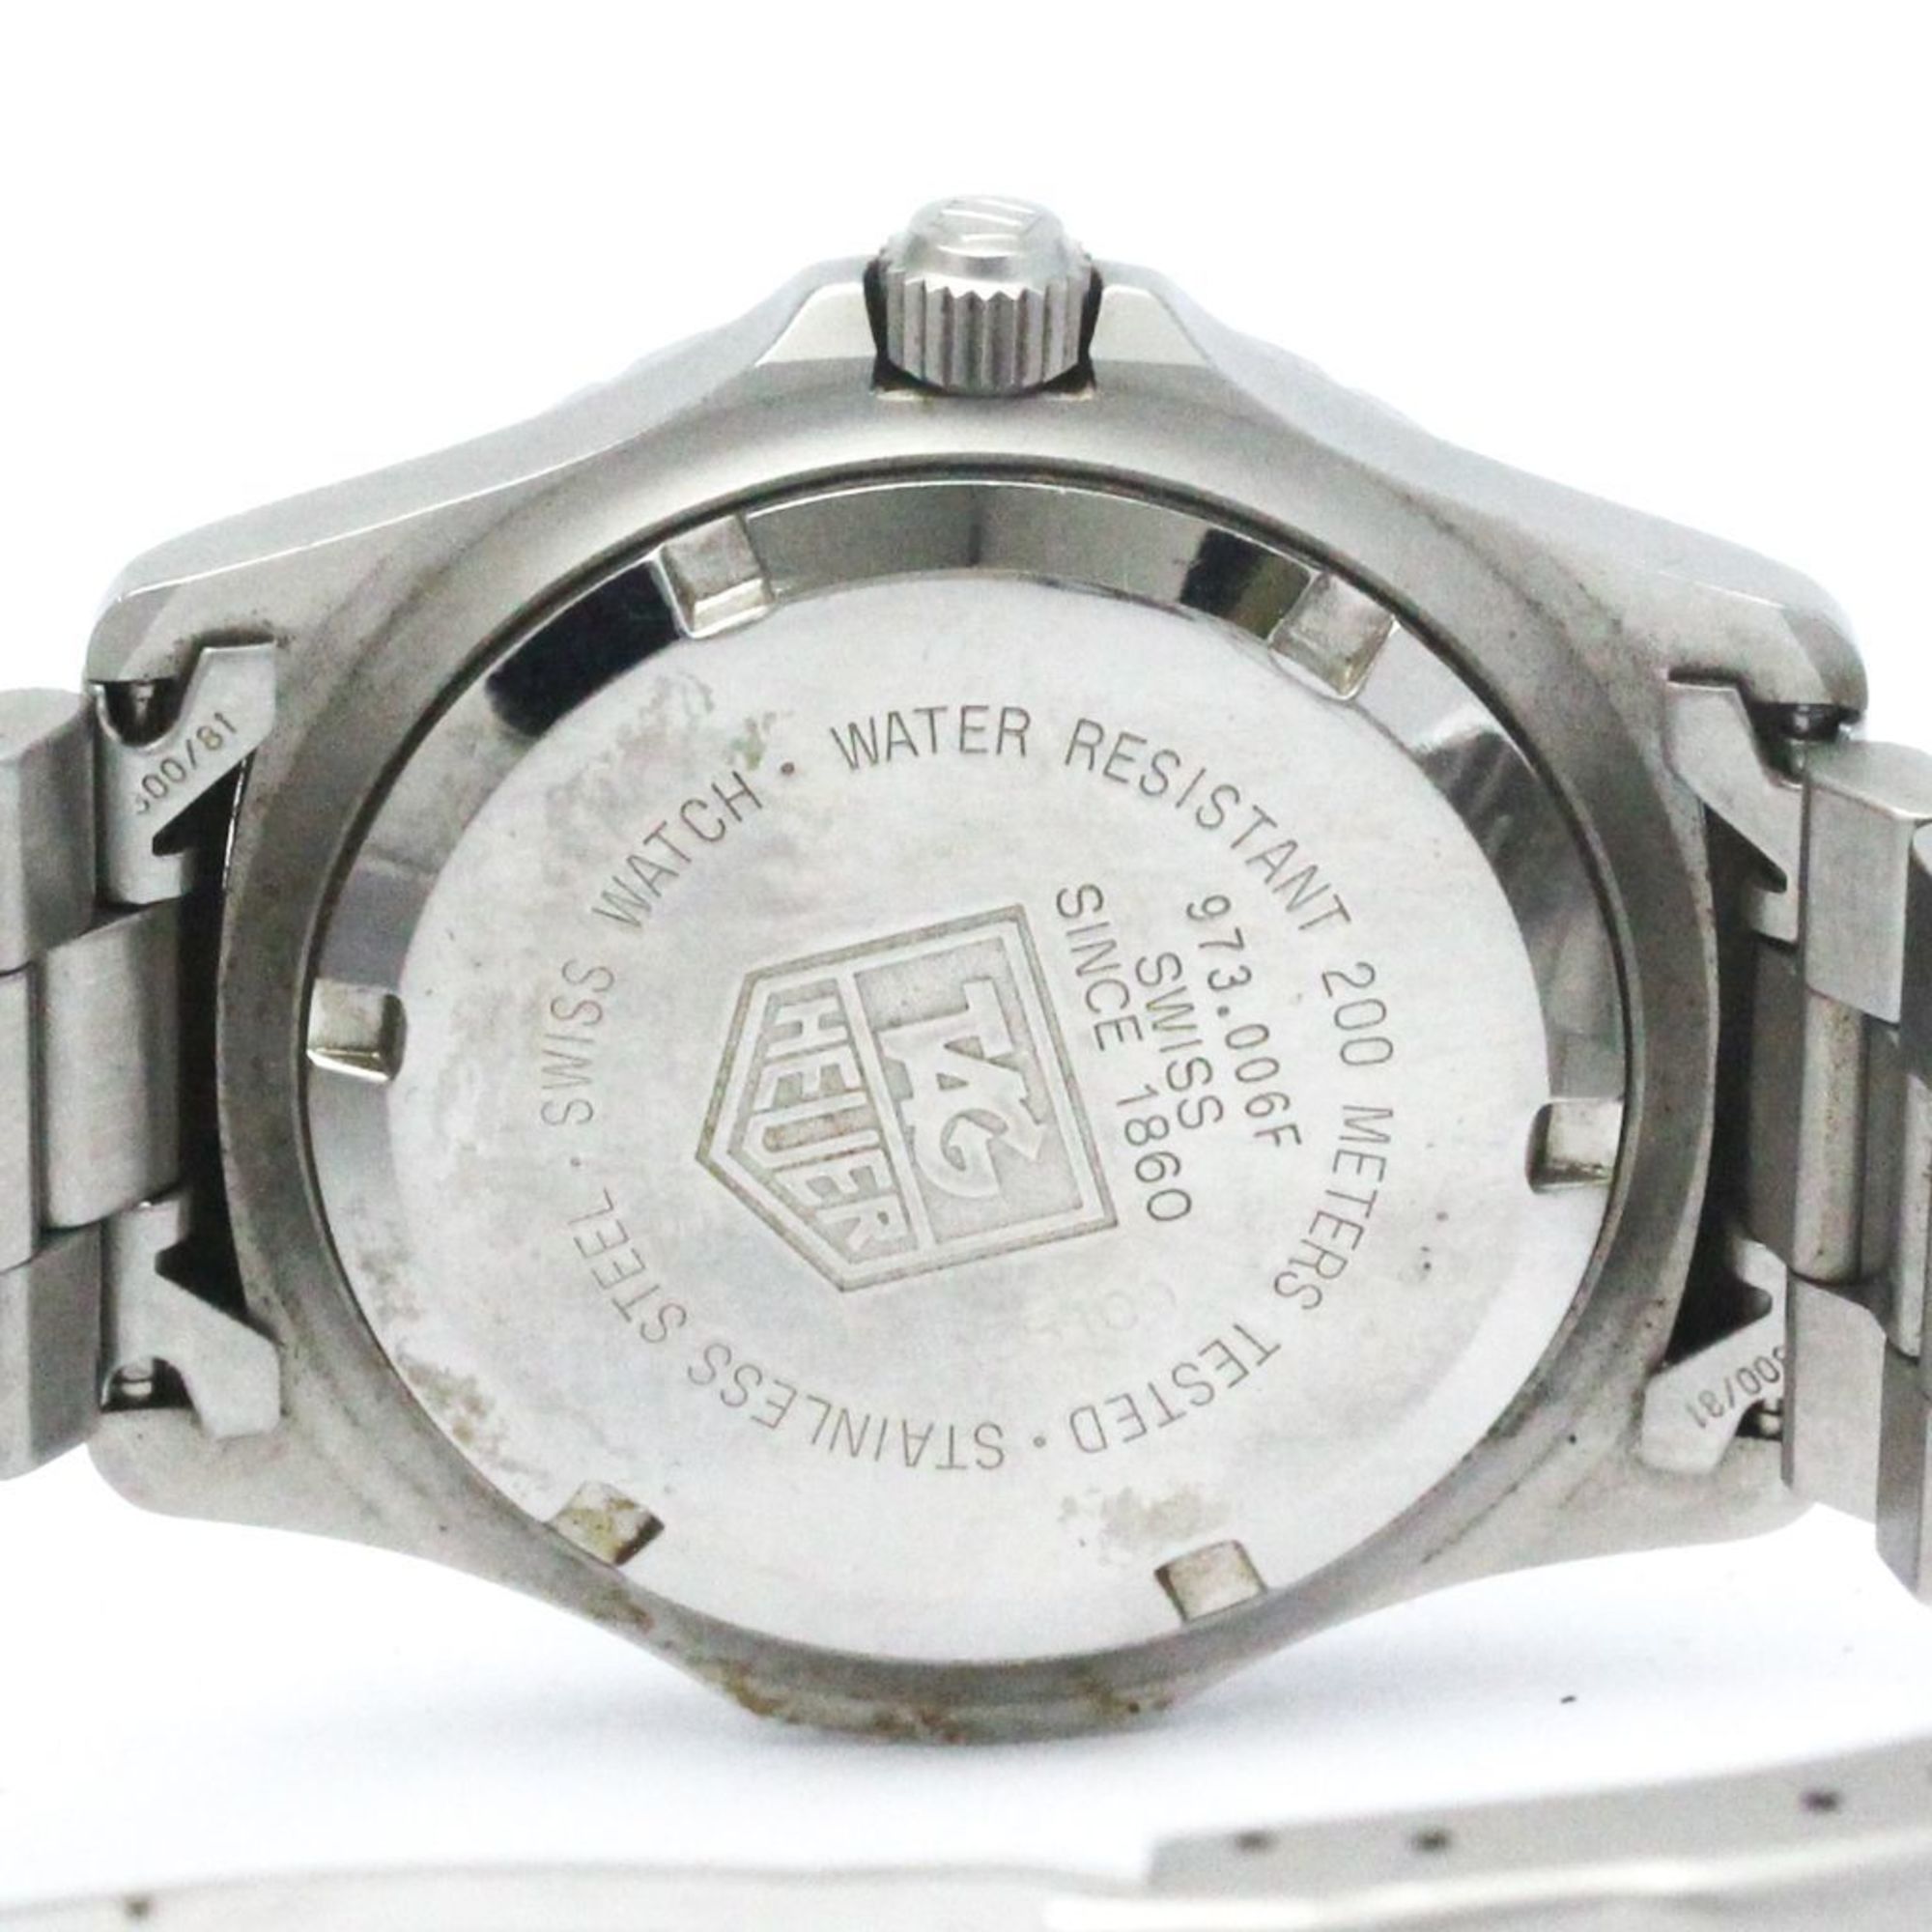 TAG HEUER Professional Chronograph Steel Quartz Mens Watch 973.006 BF569428